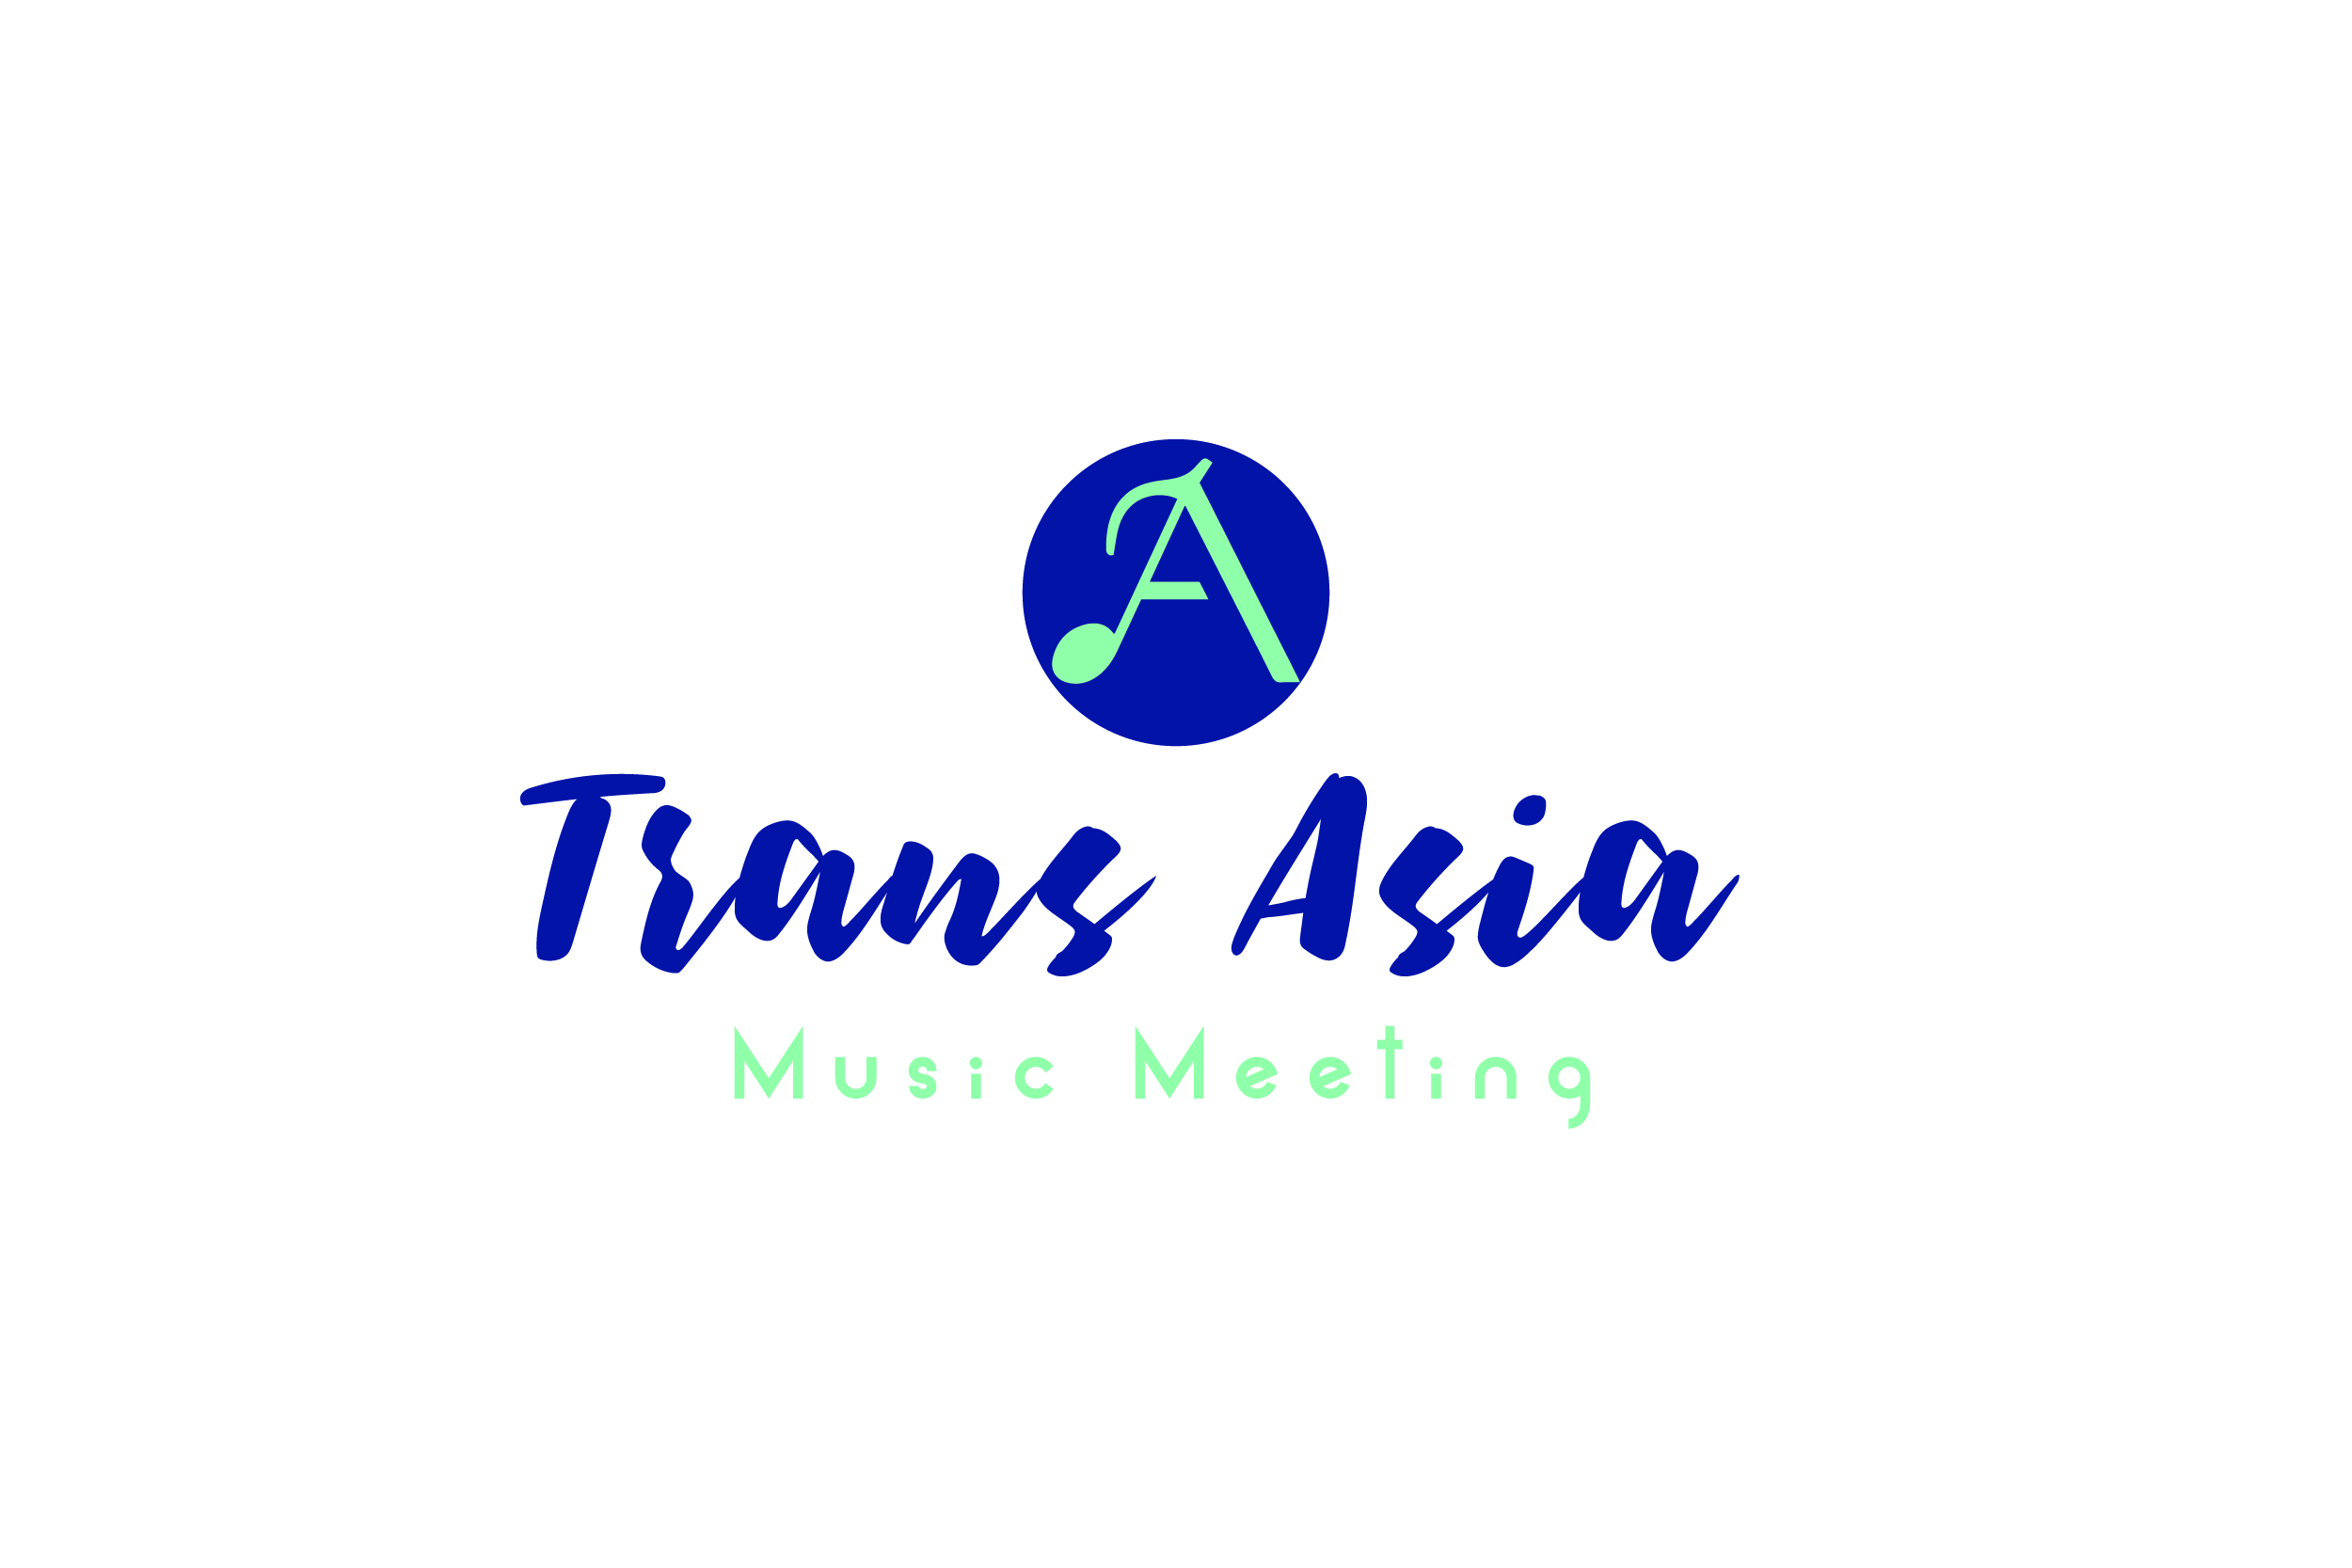 【"Trans Asia Music Meeting 2020" 最終登壇者発表】